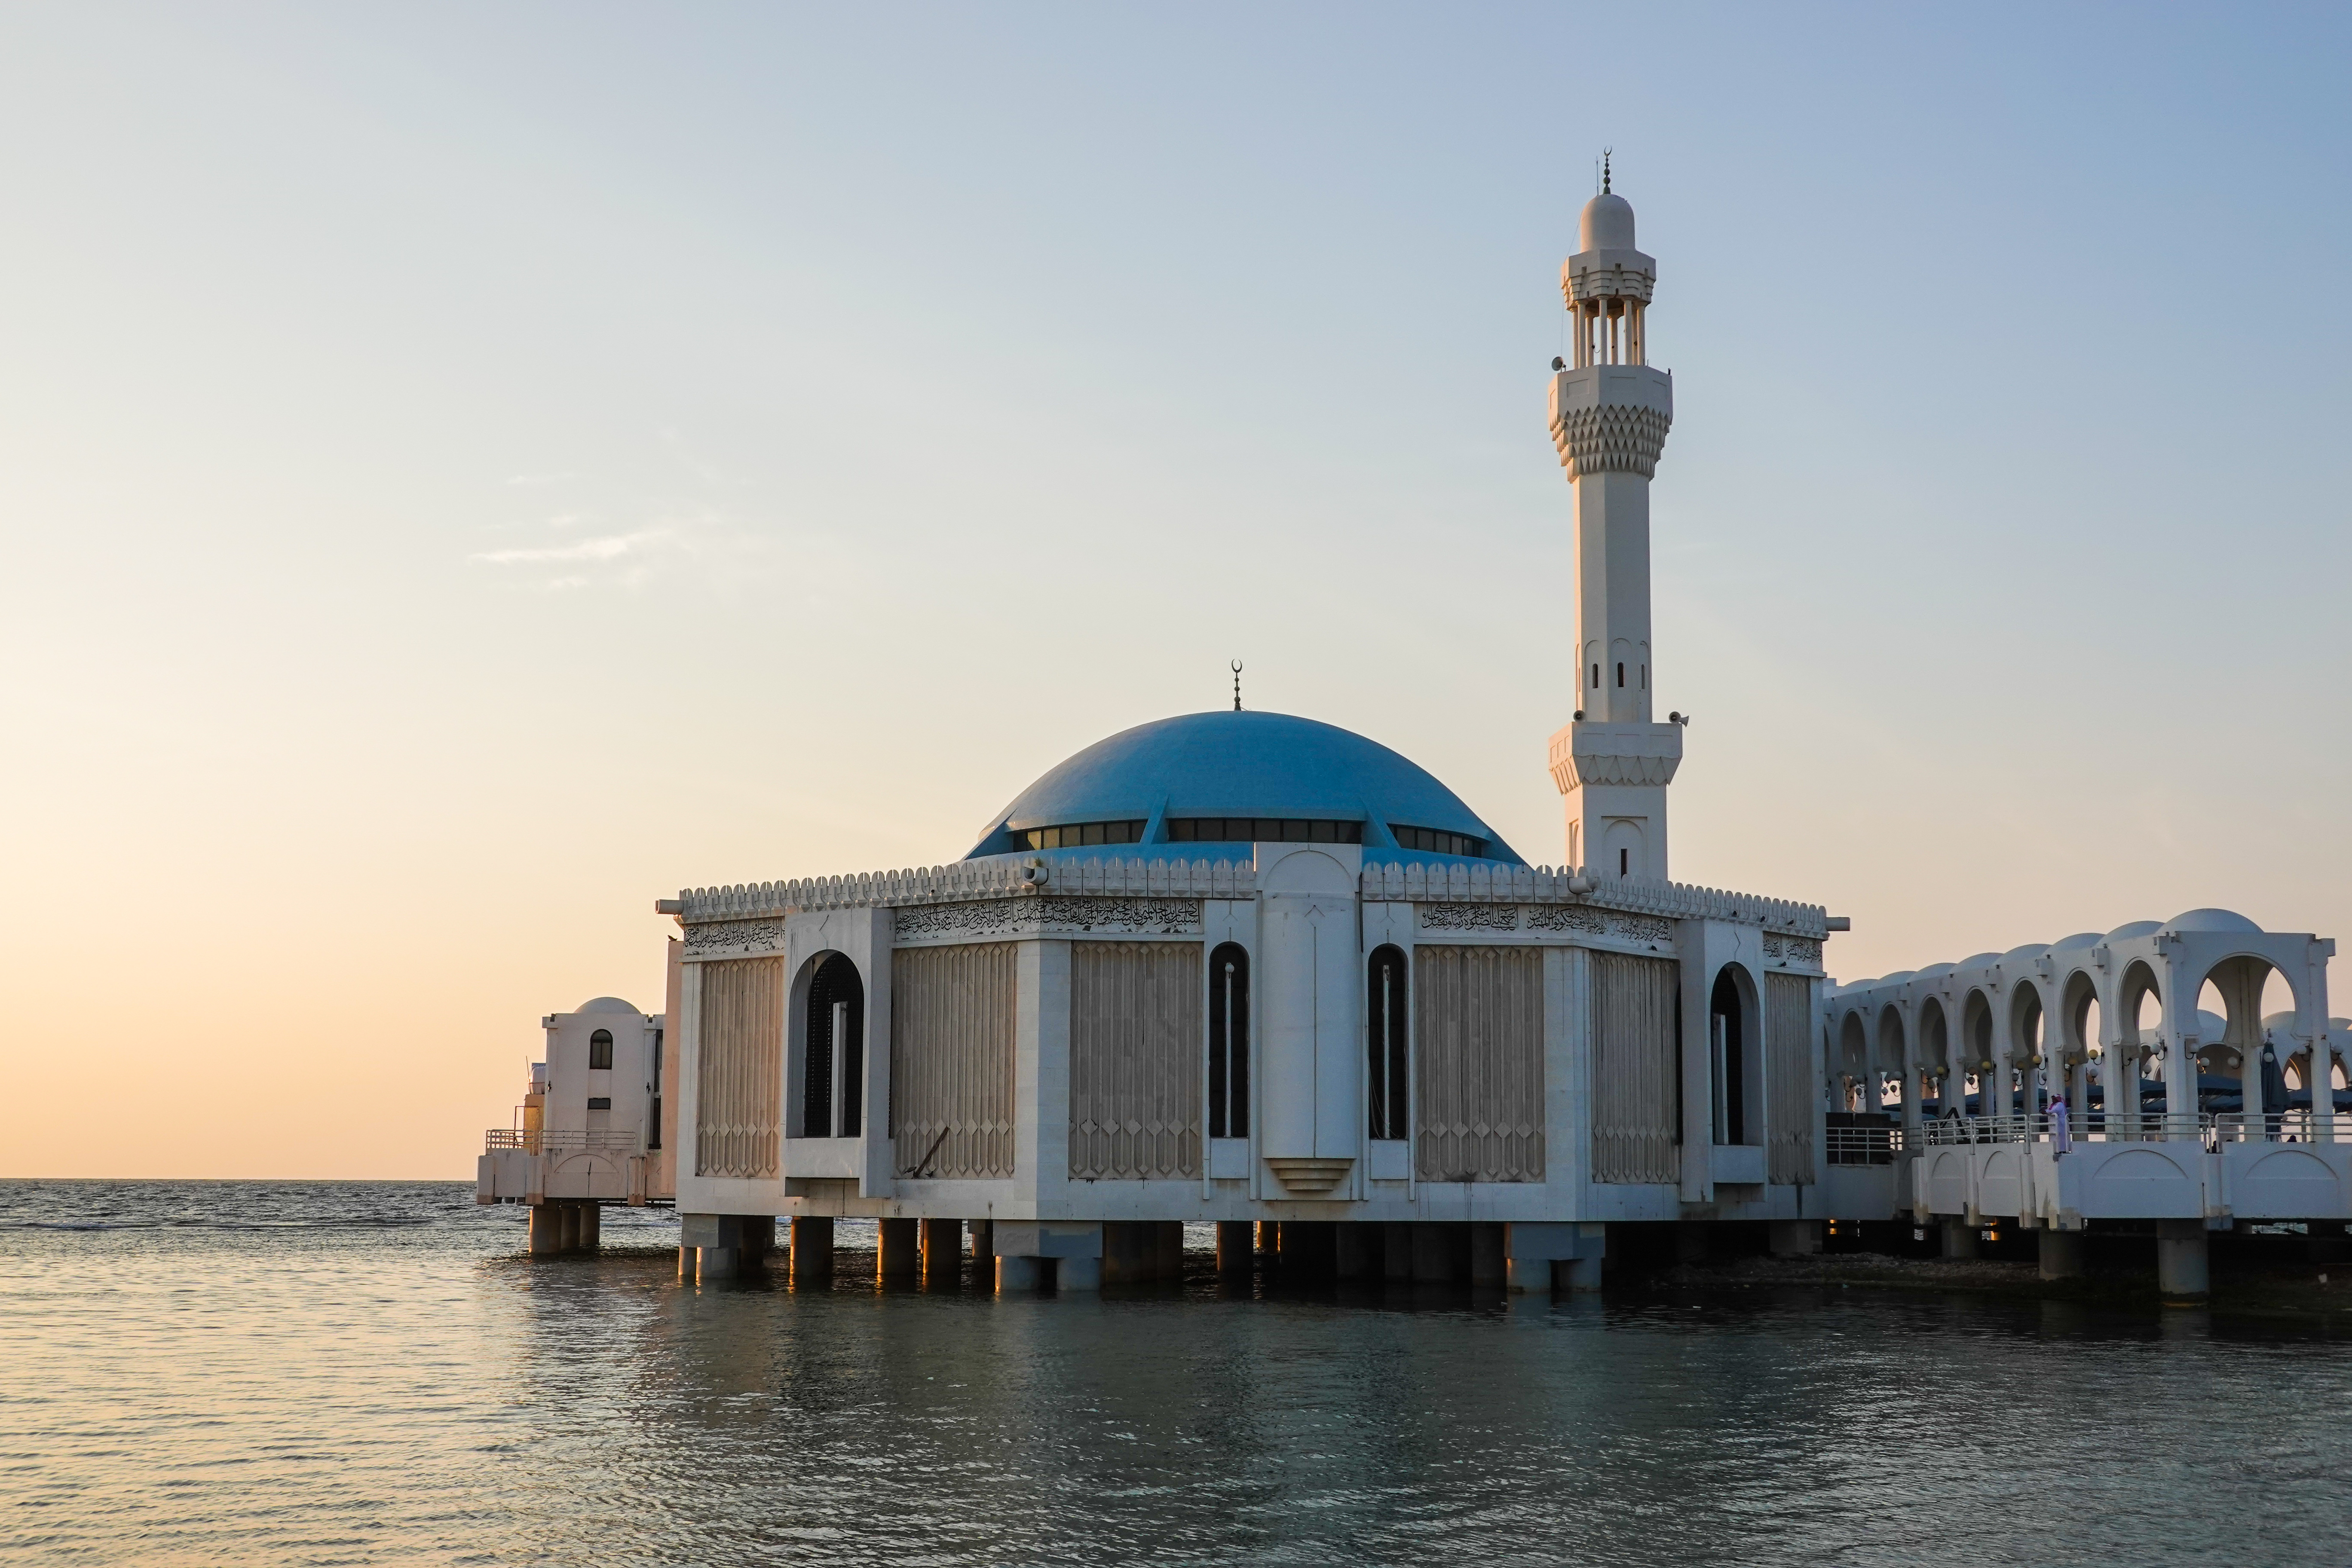 Masjid al rahma - rahma mosque - floating mosque - jedah - floating mosque in jeddah - nada al nahdi .jpeg